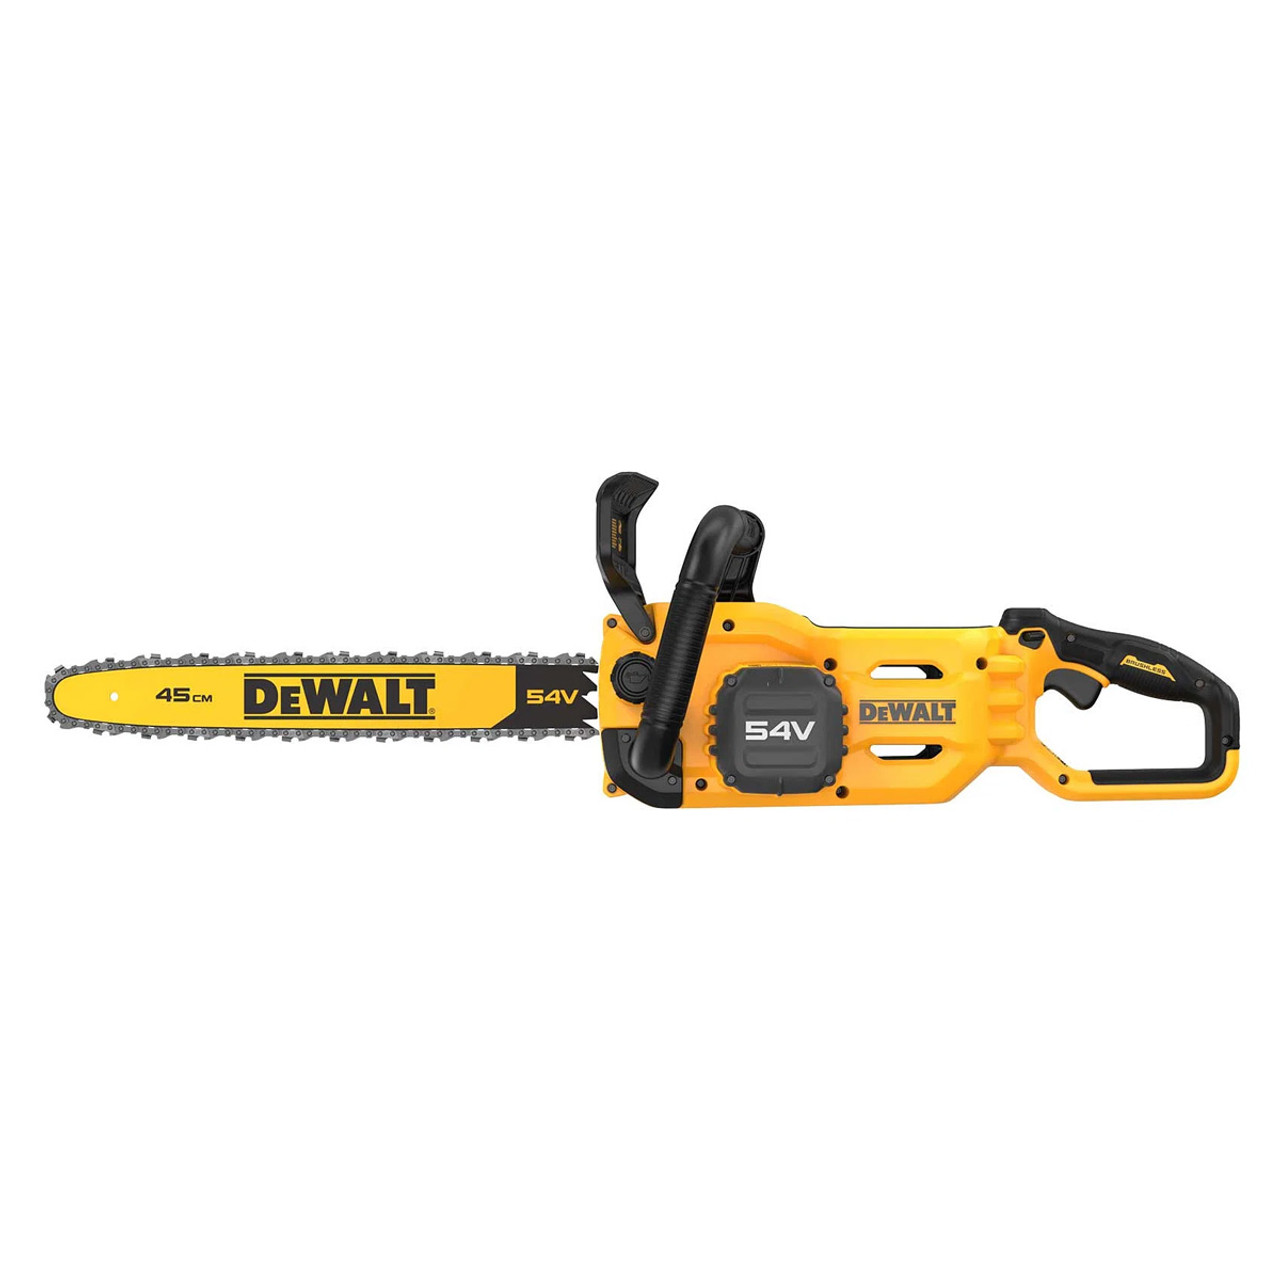 DeWalt 54v FlexVolt cordless chainsaw